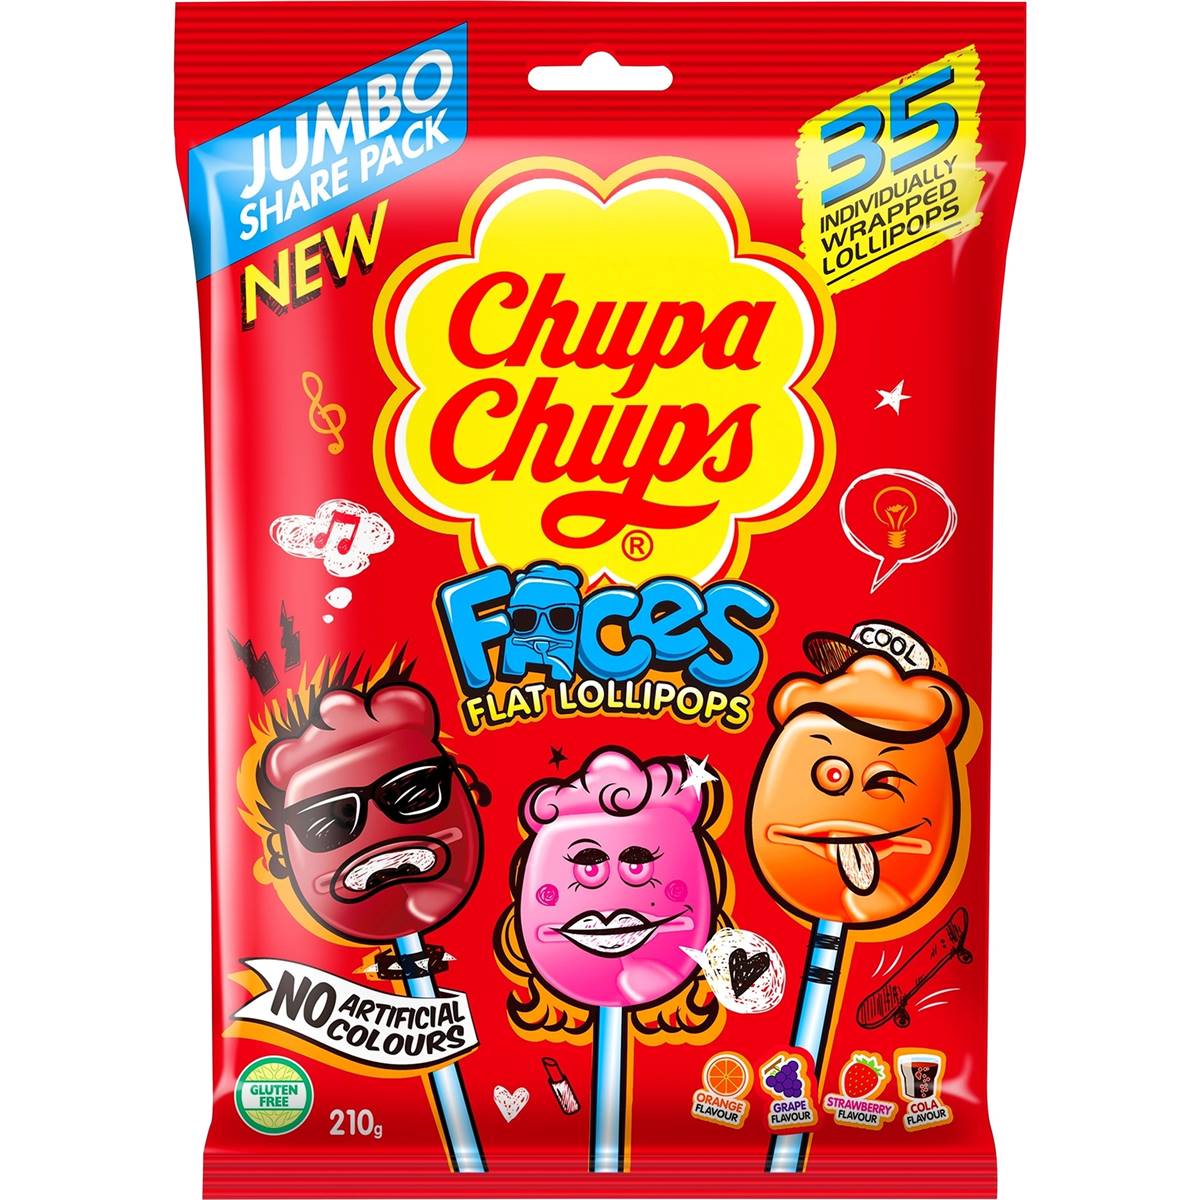 Calories in Chupa Chups Faces Flat Lollipops